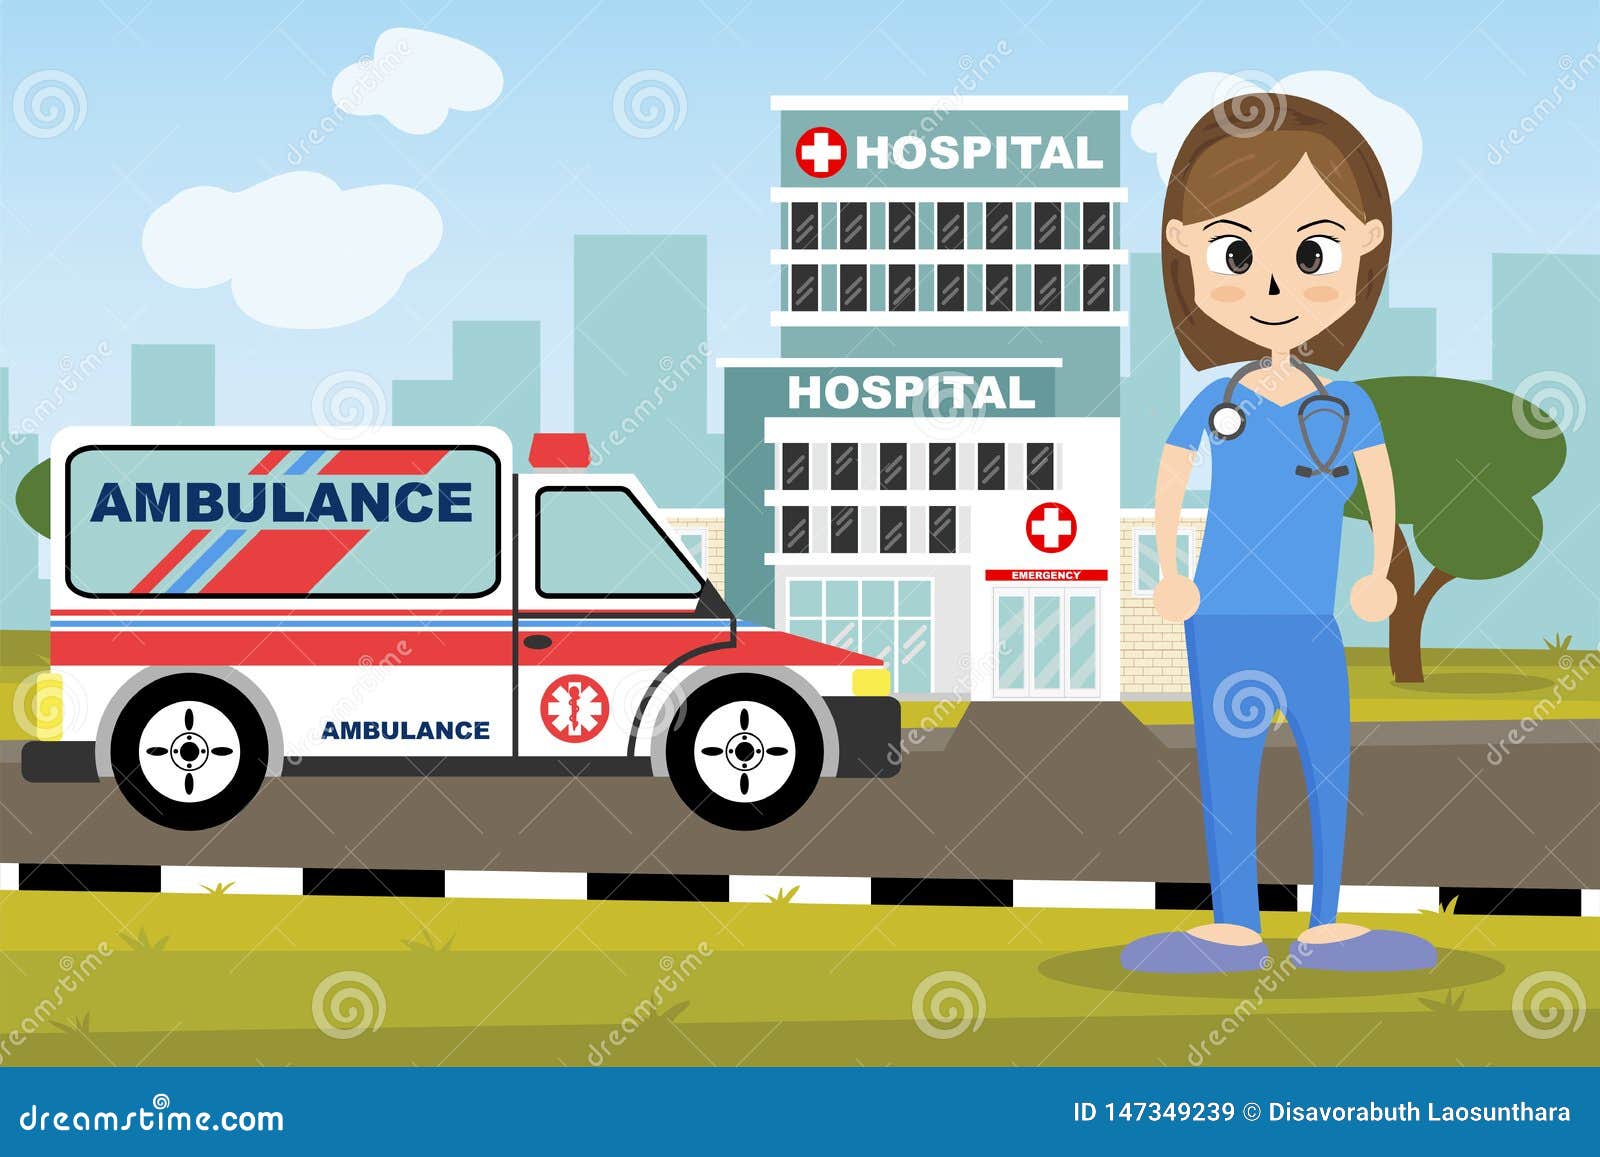 Children Emergency Ambulance Simulation Car Model Educational Toy Kids Gift  A | eBay